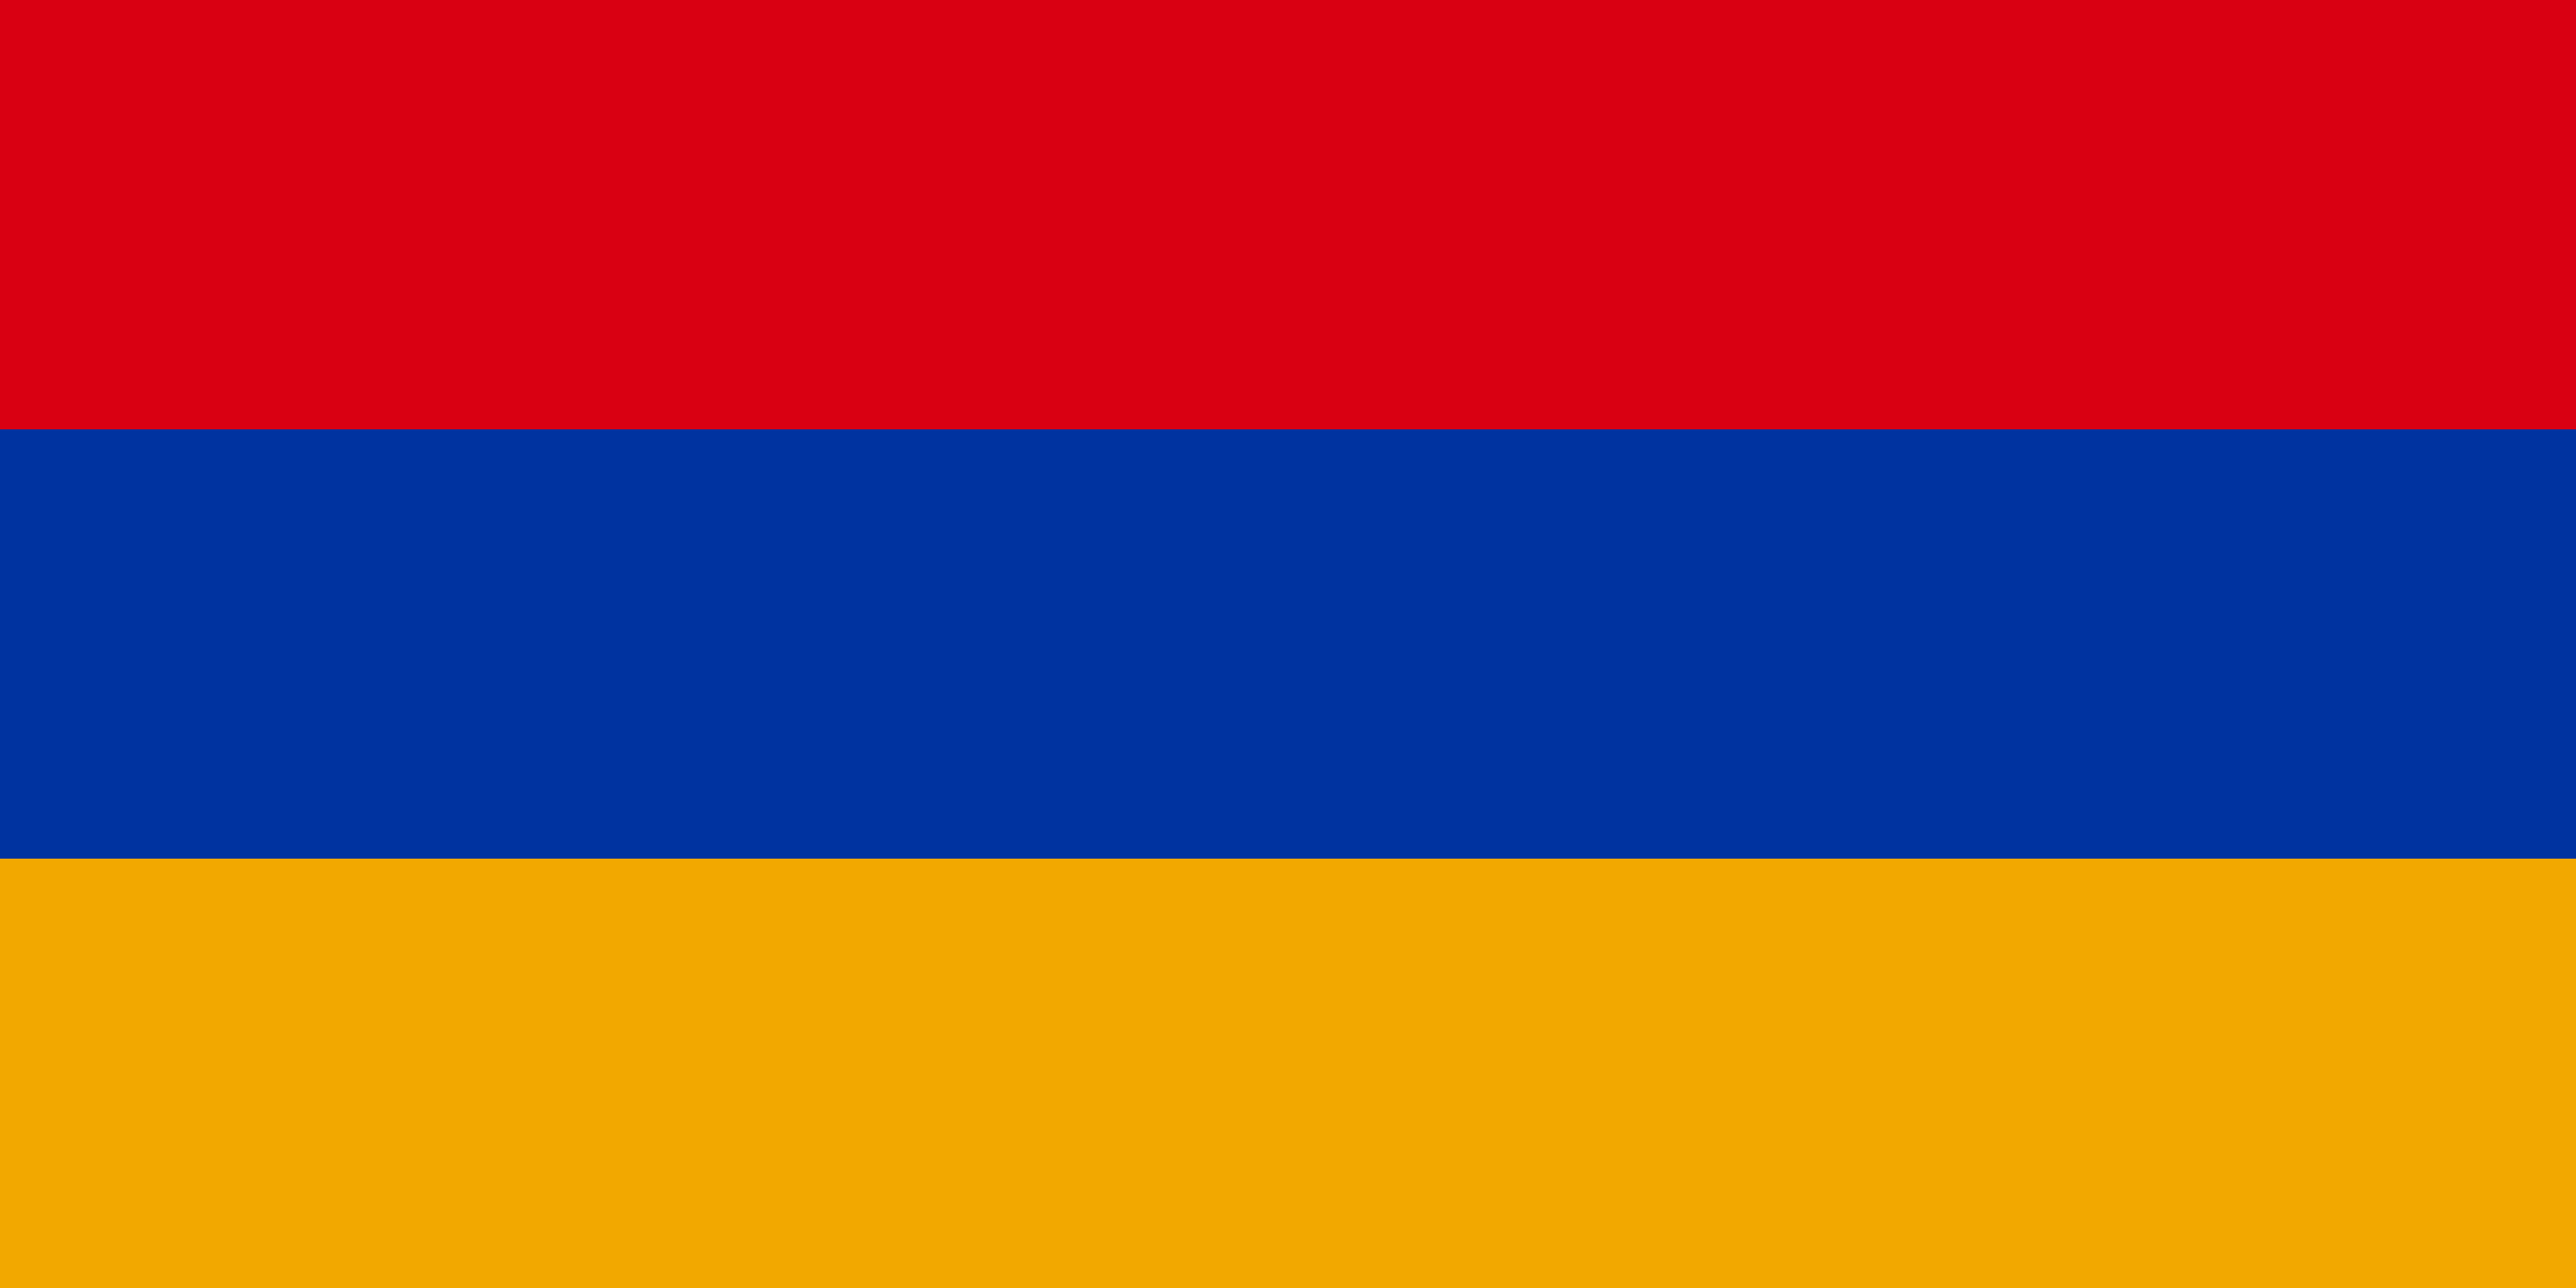 Armenia Flag Image - Free Download